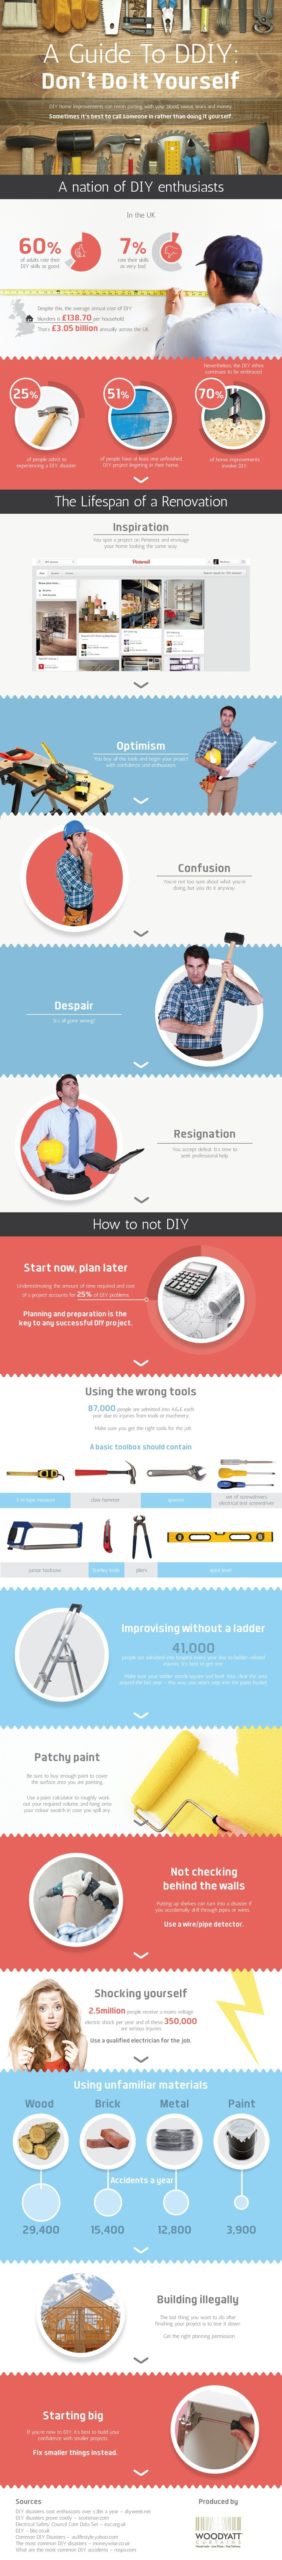 This Infographic Warns Of Common DIY Pitfalls